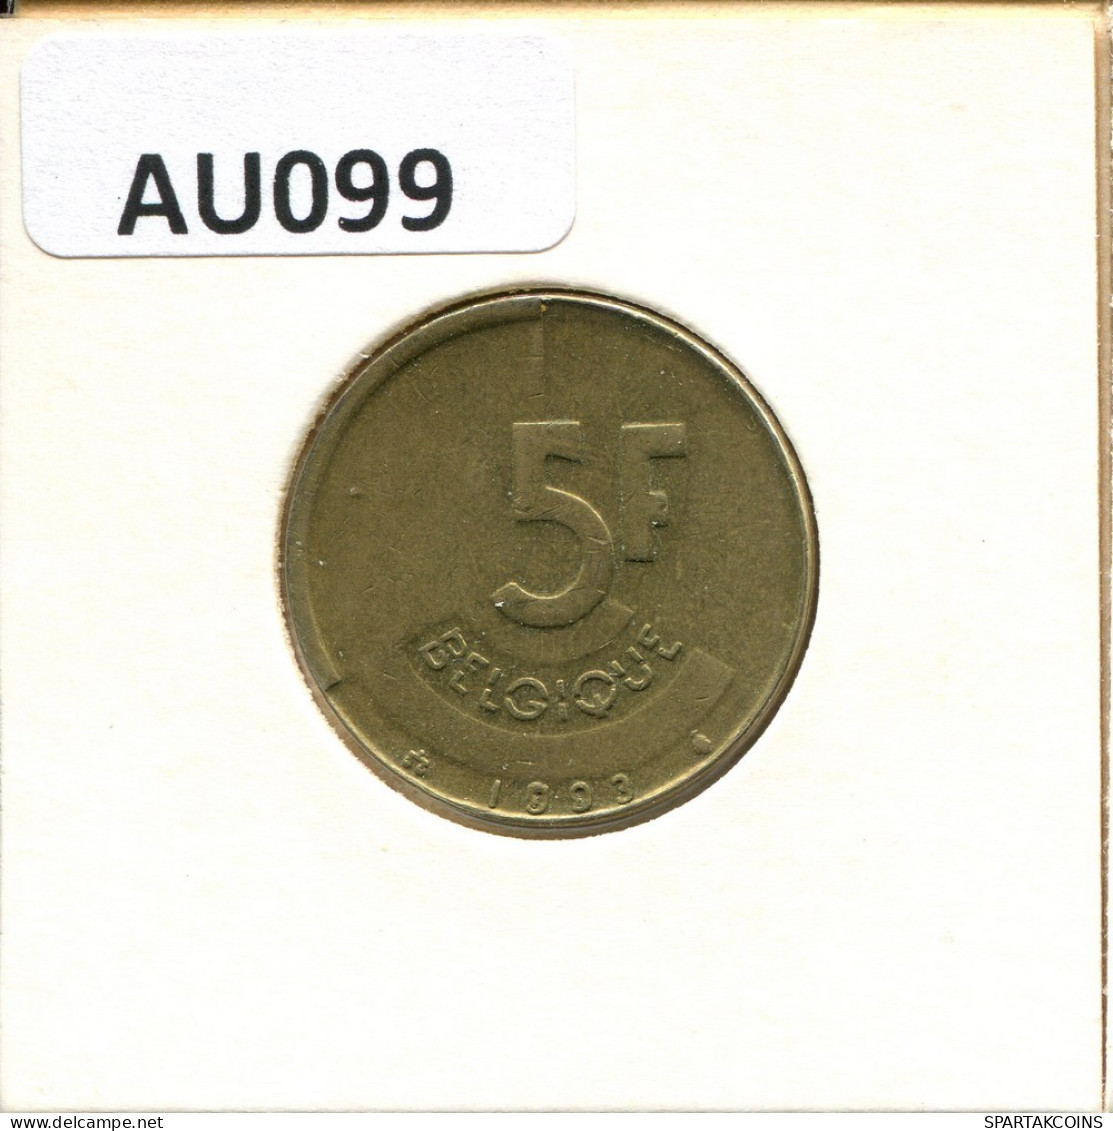 5 FRANCS 1993 FRENCH Text BELGIUM Coin #AU099.U.A - 5 Francs